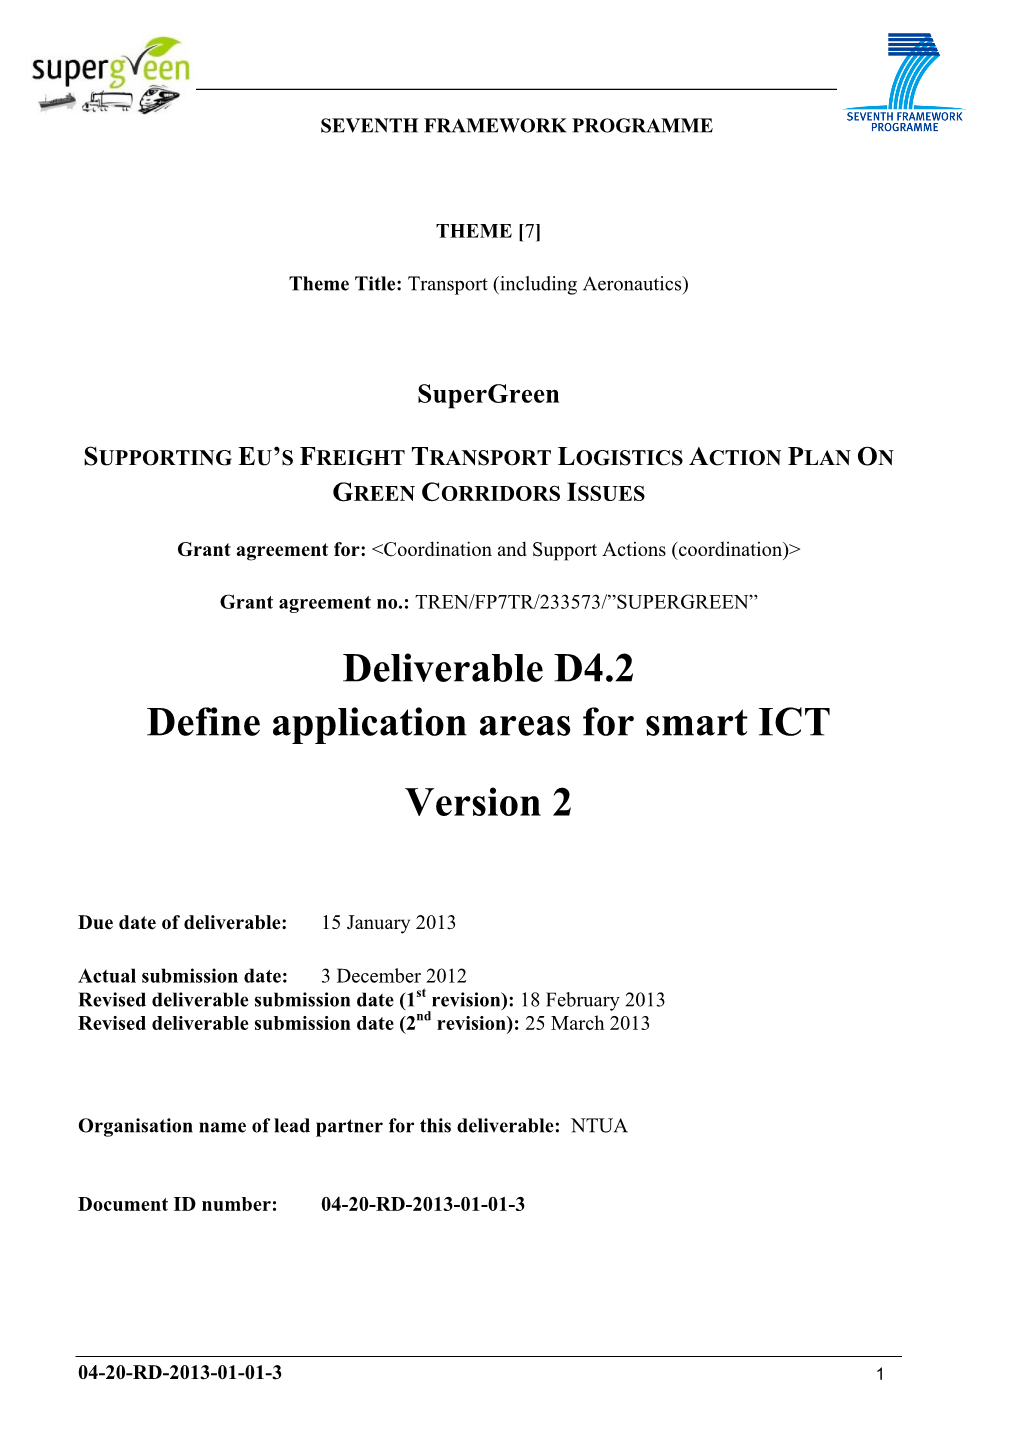 Deliverable D4.2 Define Application Areas for Smart ICT Version 2